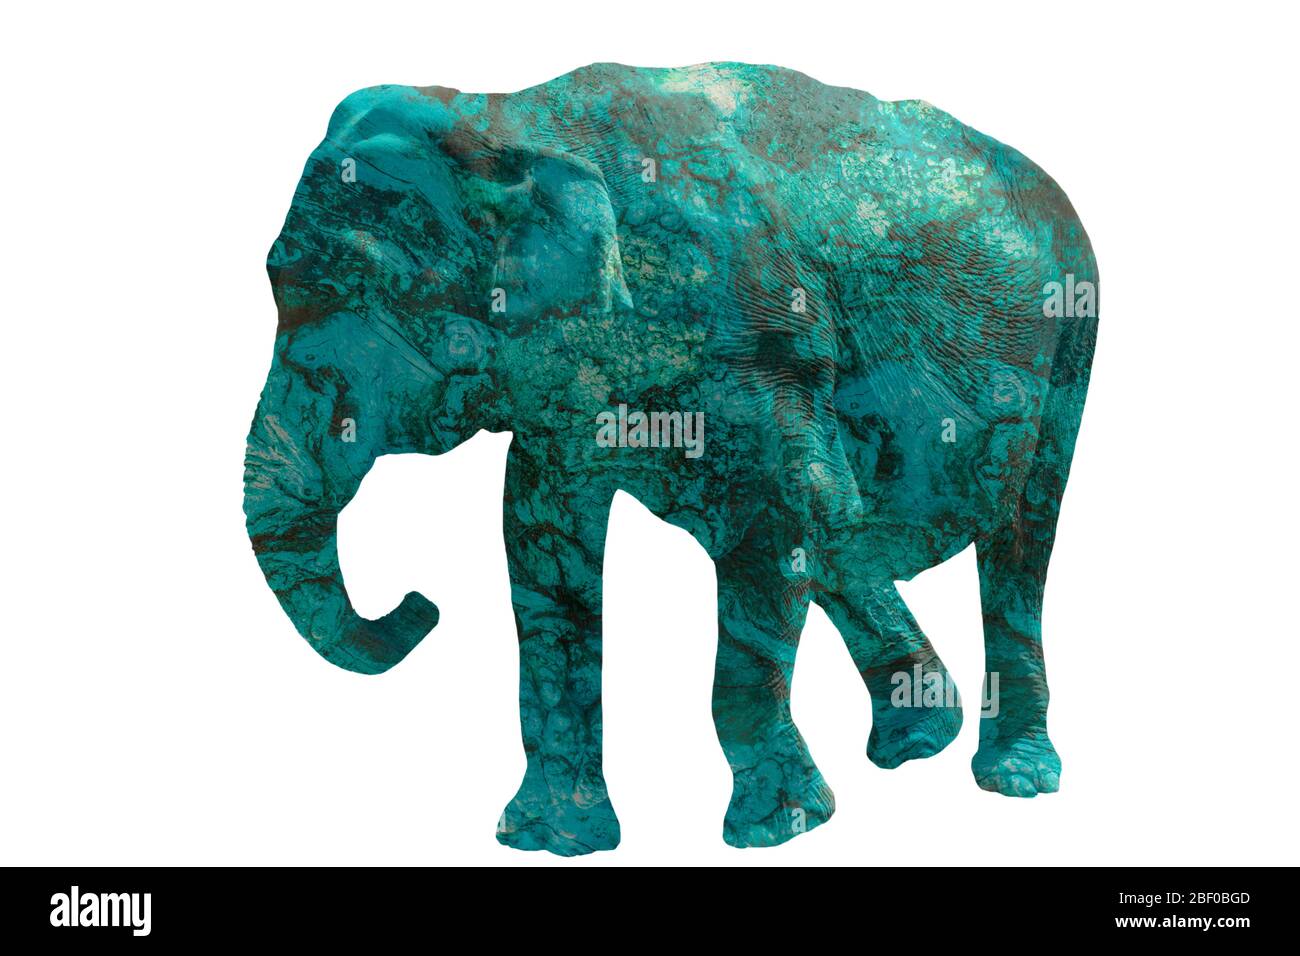 Elefant Illustration mit türkis grauer Holz Struktur Stock Photo